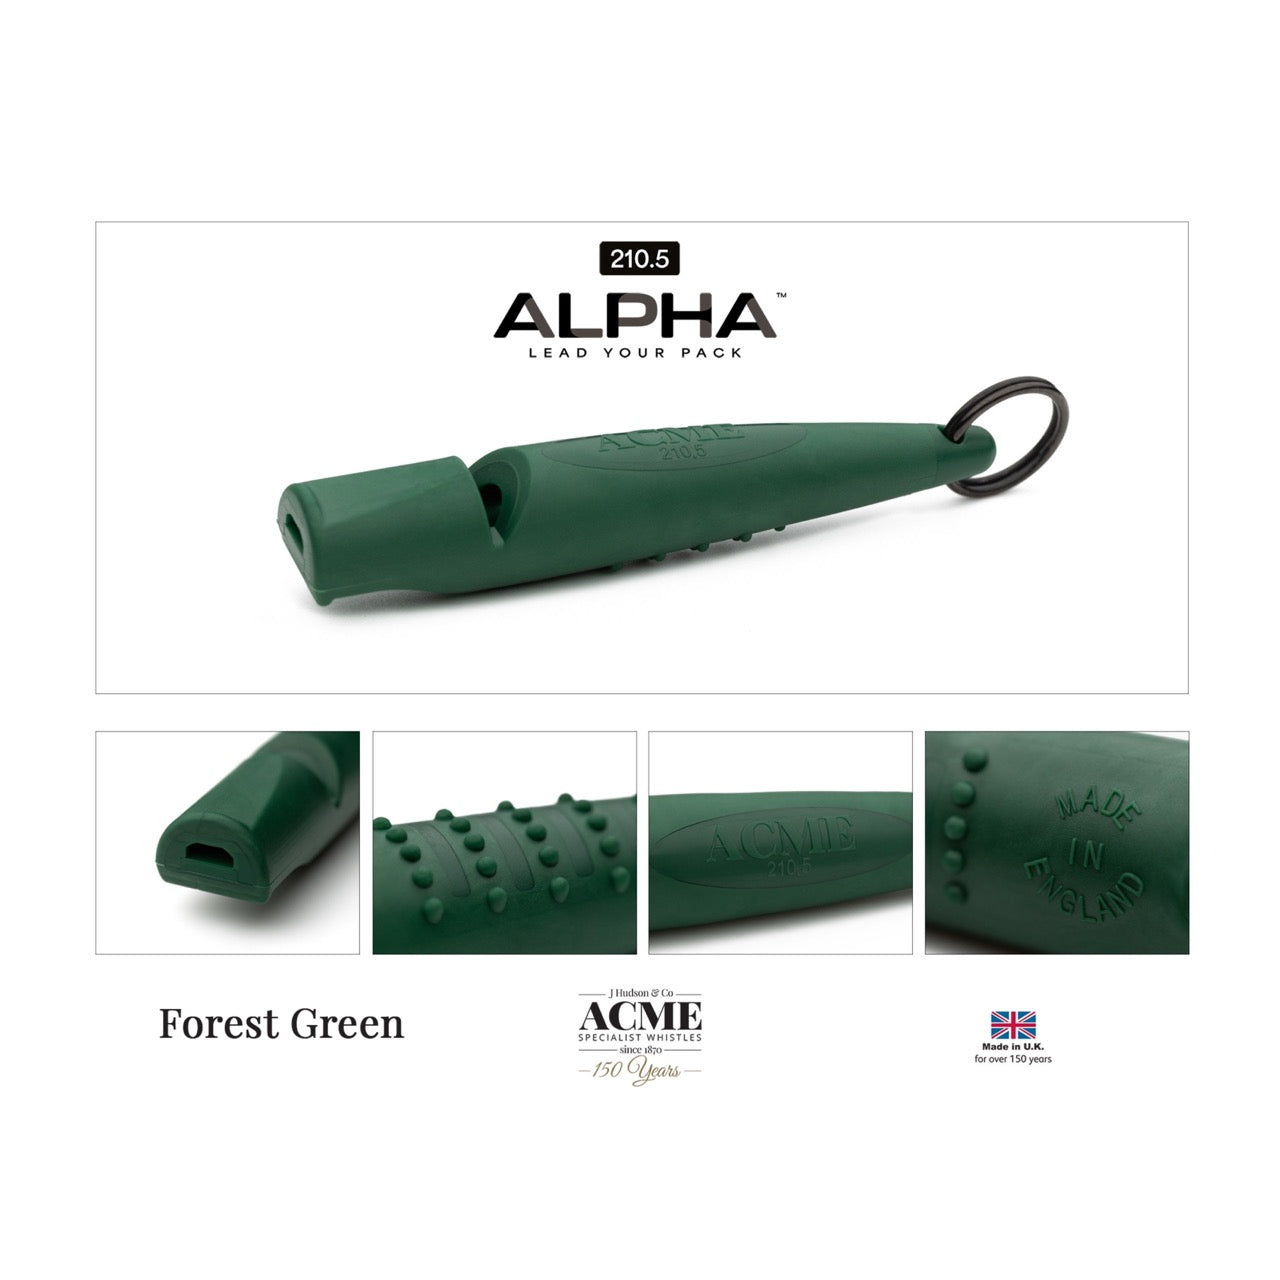 Acme Acme Alpha beste hondenfluit toonhoogte 210.5 forest green